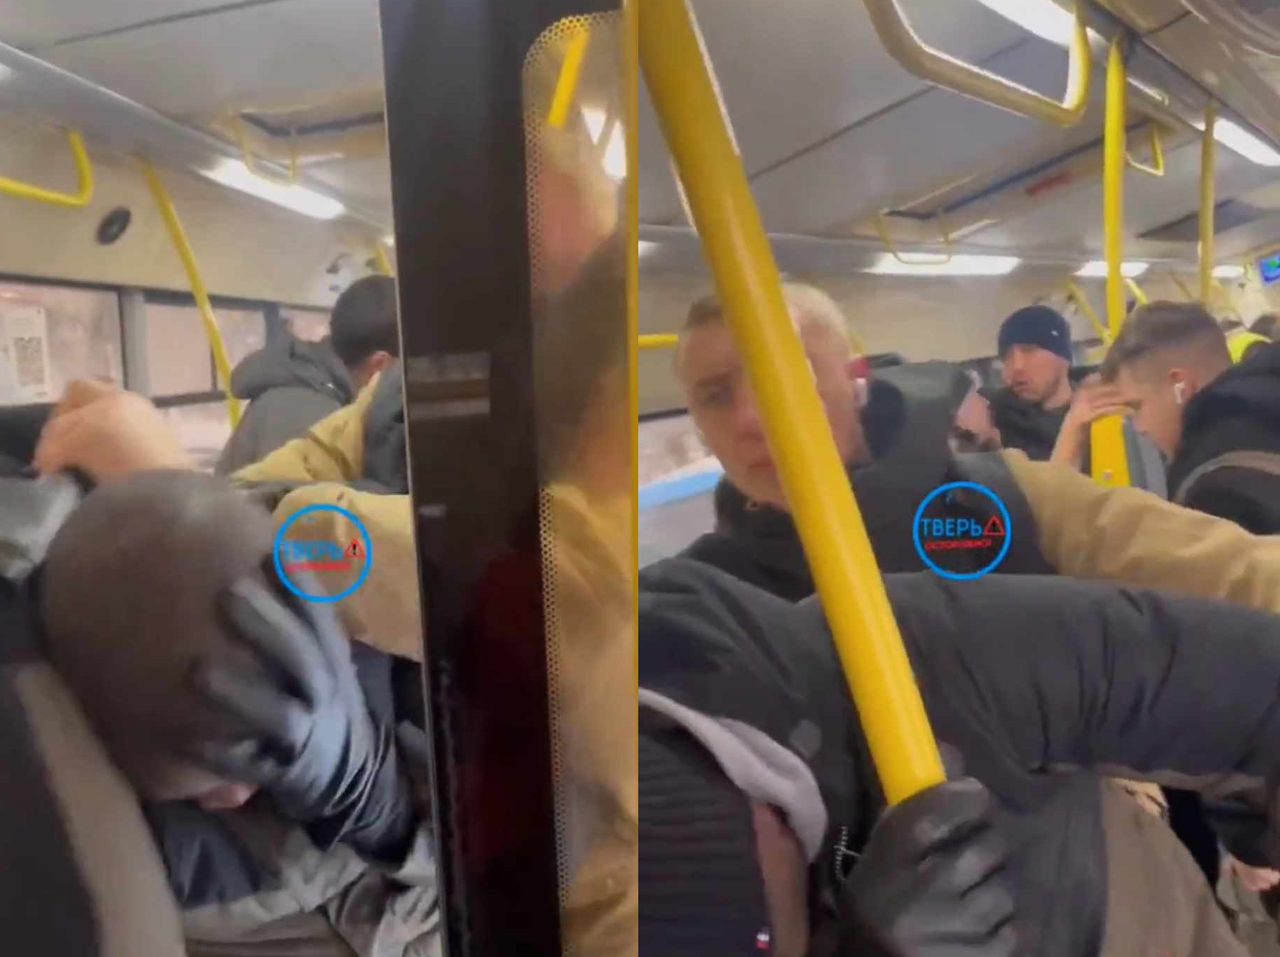 Disturbing footage from Russia. Black passenger assaulted